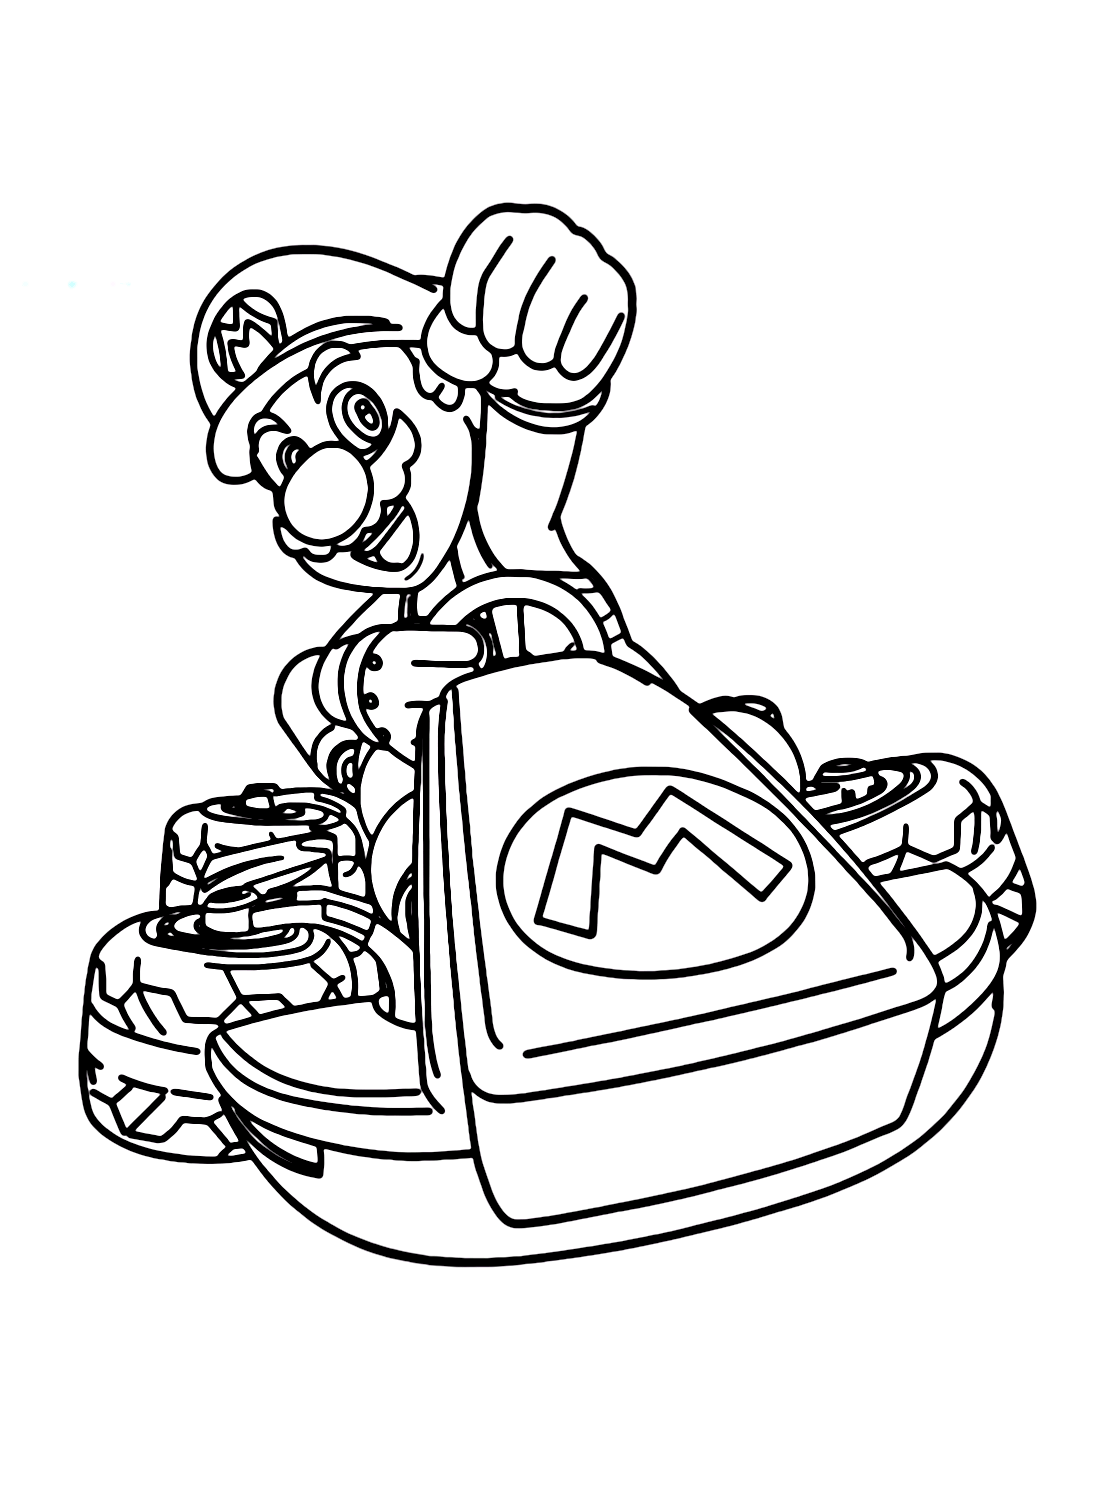 Mario di Mario Kart 8 Deluxe di Mario Kart